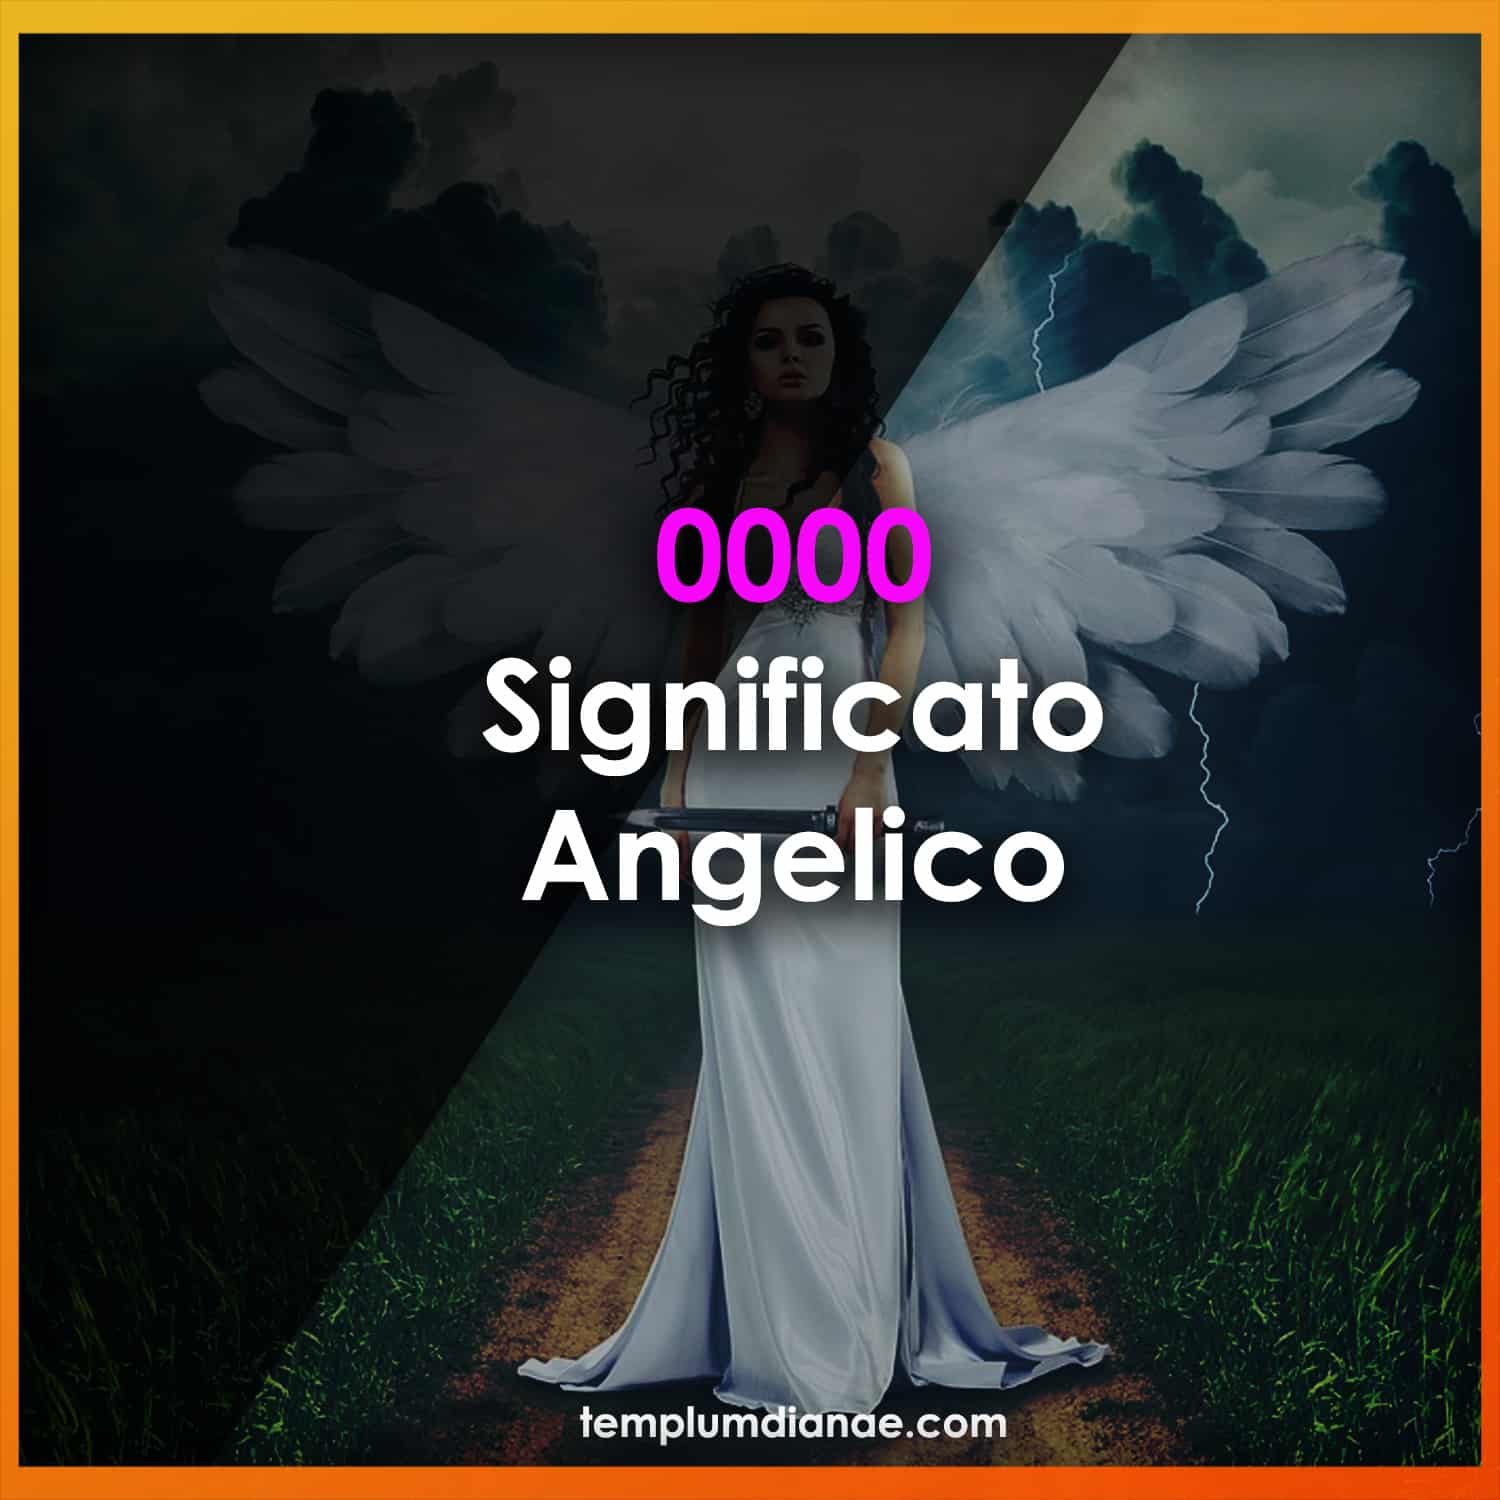 0000 significato angelico